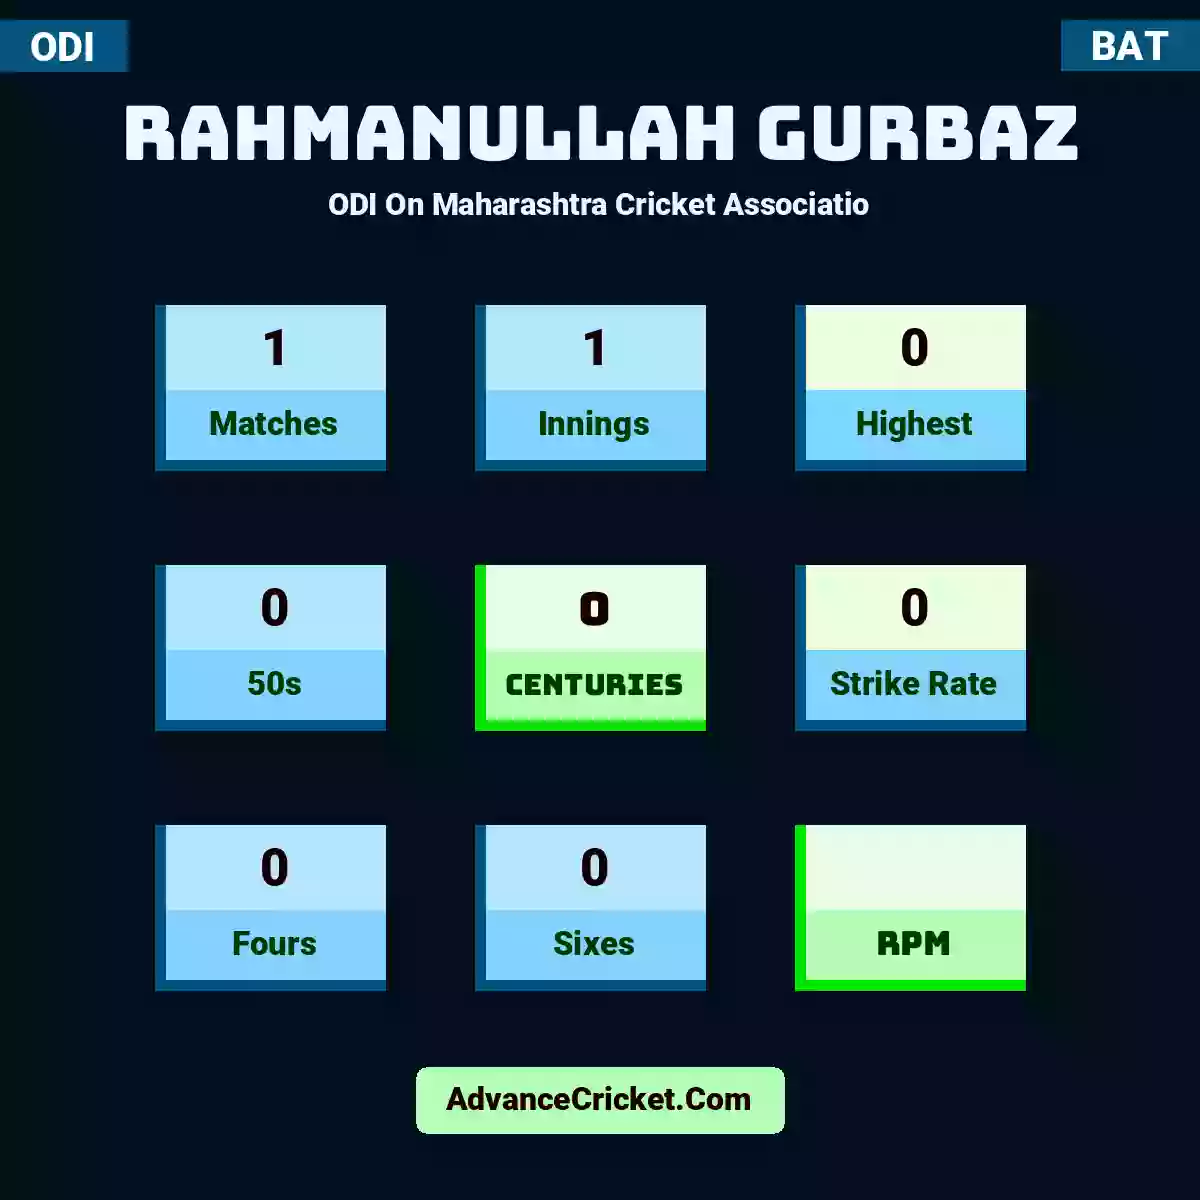 Rahmanullah Gurbaz ODI  On Maharashtra Cricket Associatio, Rahmanullah Gurbaz played 1 matches, scored 0 runs as highest, 0 half-centuries, and 0 centuries, with a strike rate of 0. R.Gurbaz hit 0 fours and 0 sixes.